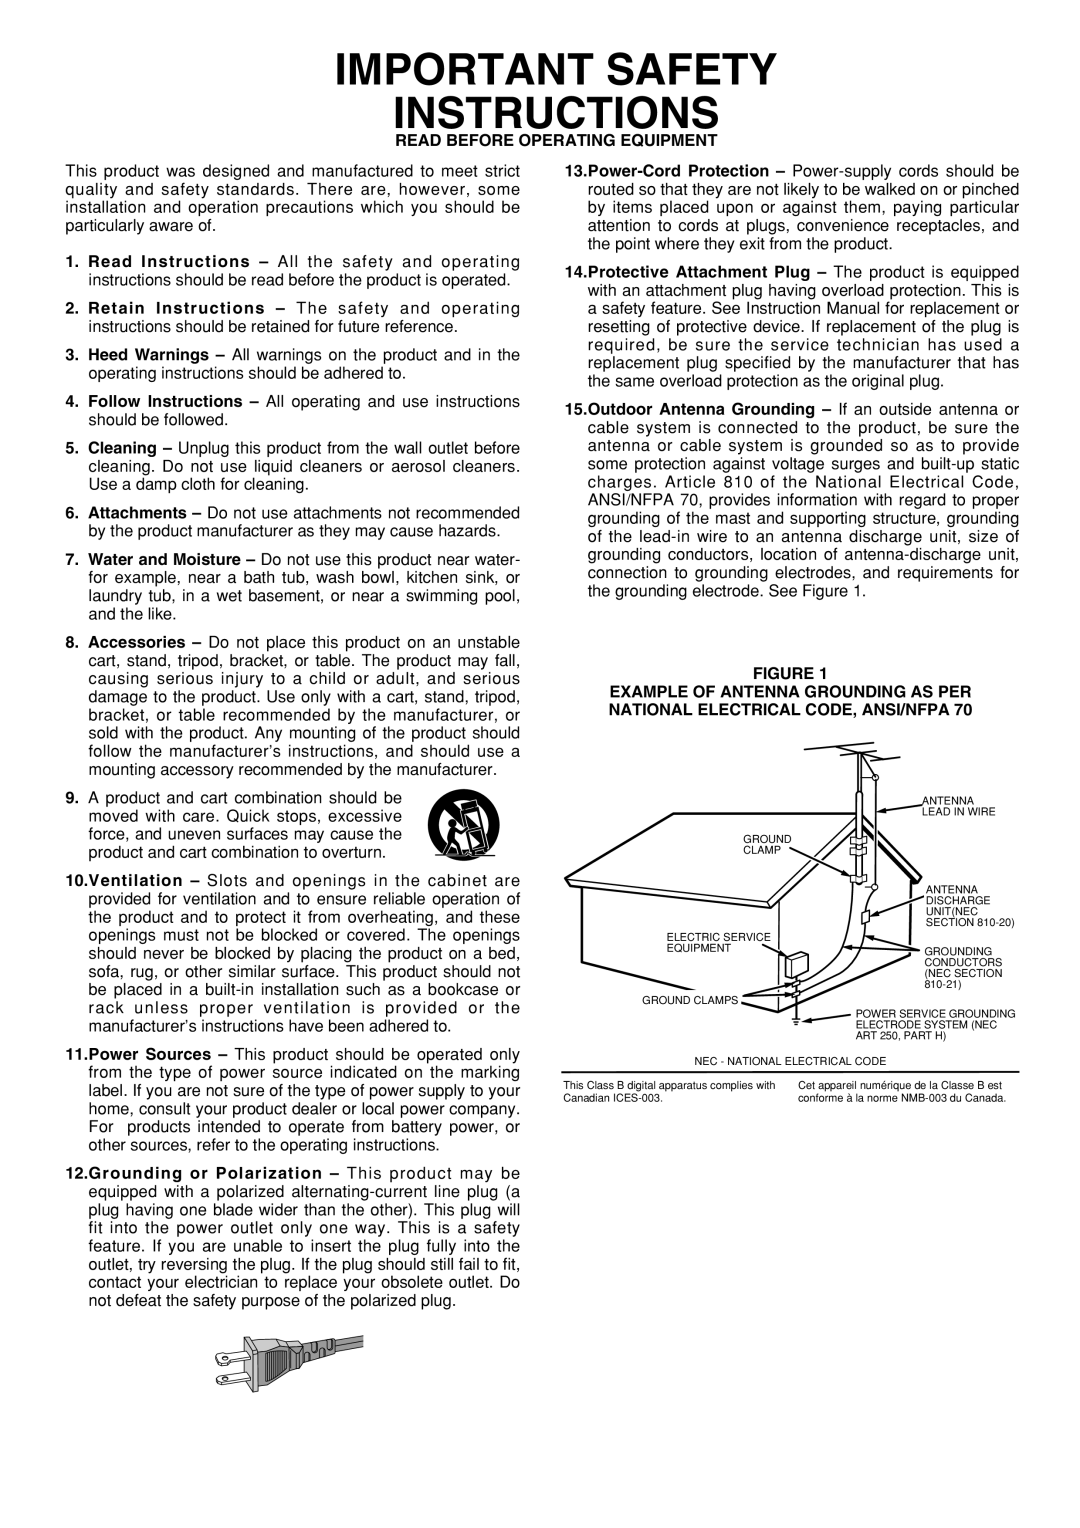 Marantz CC4300 manual Important Safety Instructions 